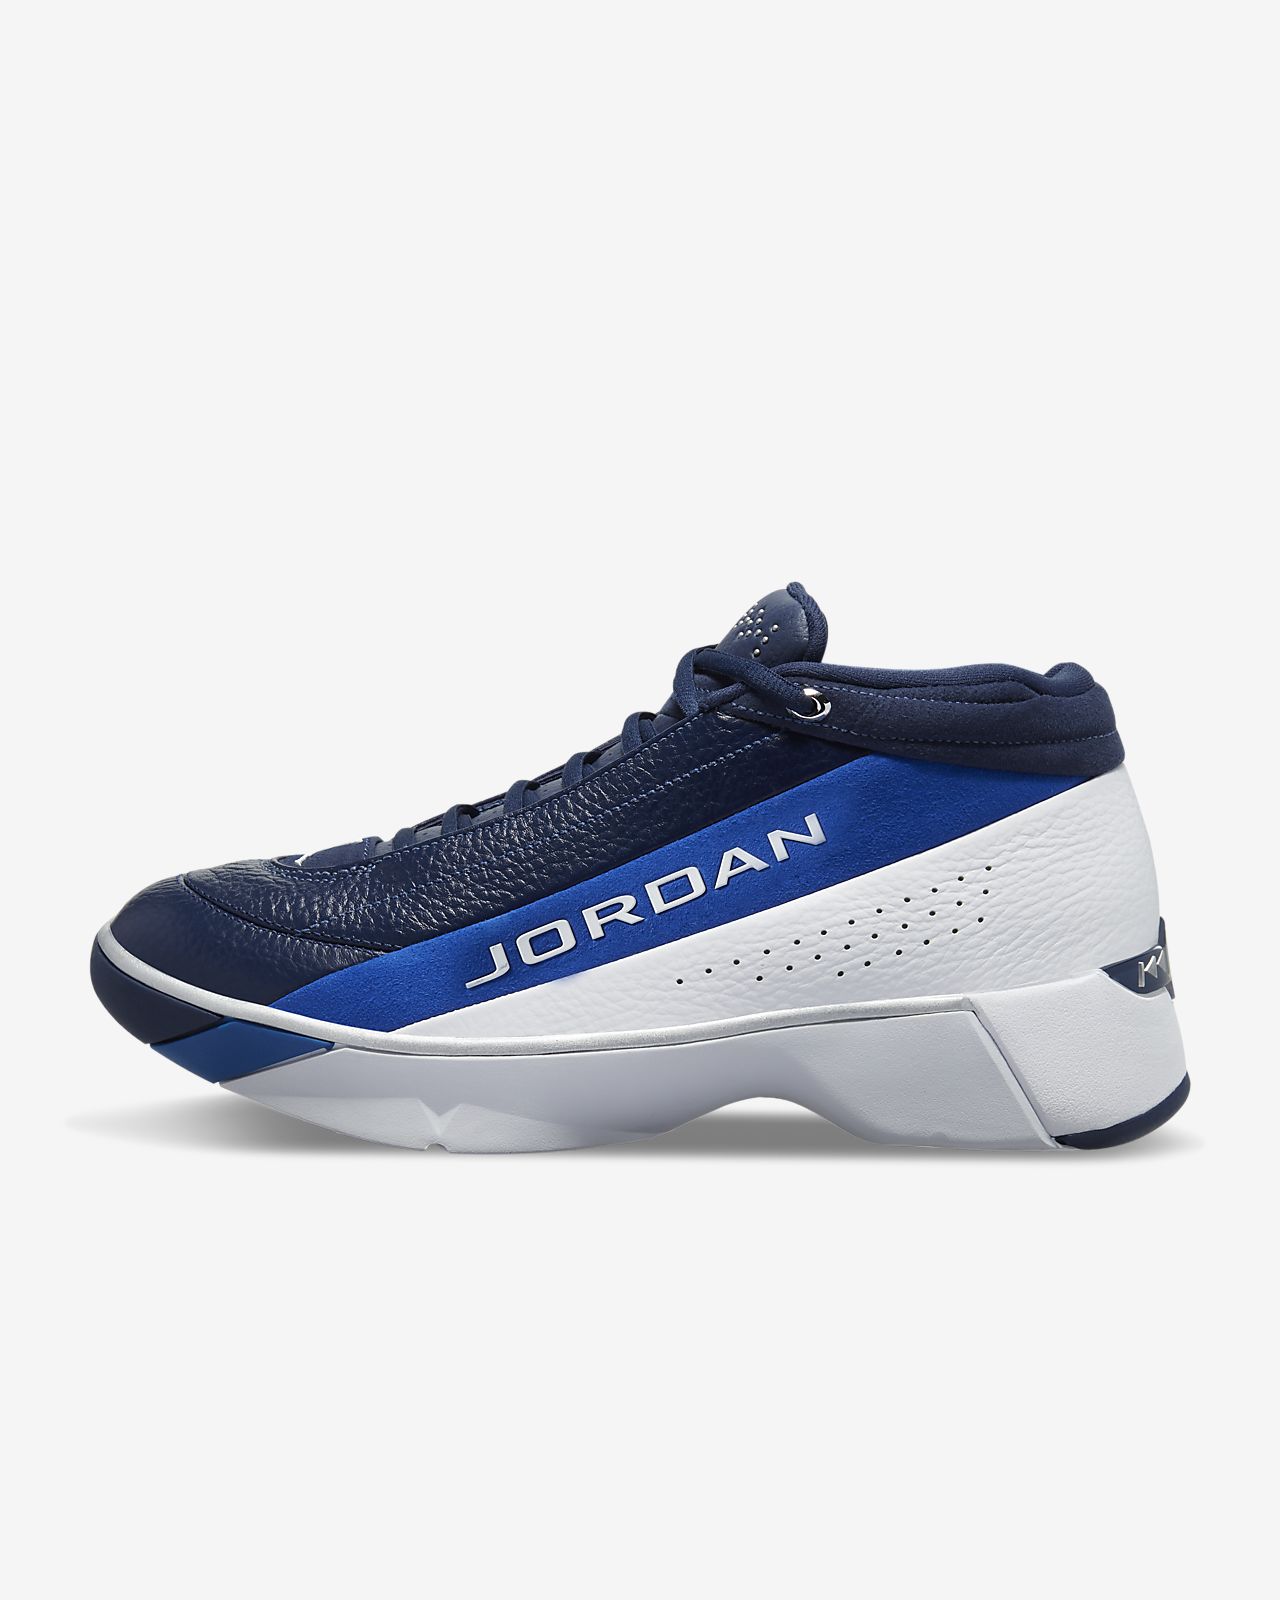 team jordan shoes